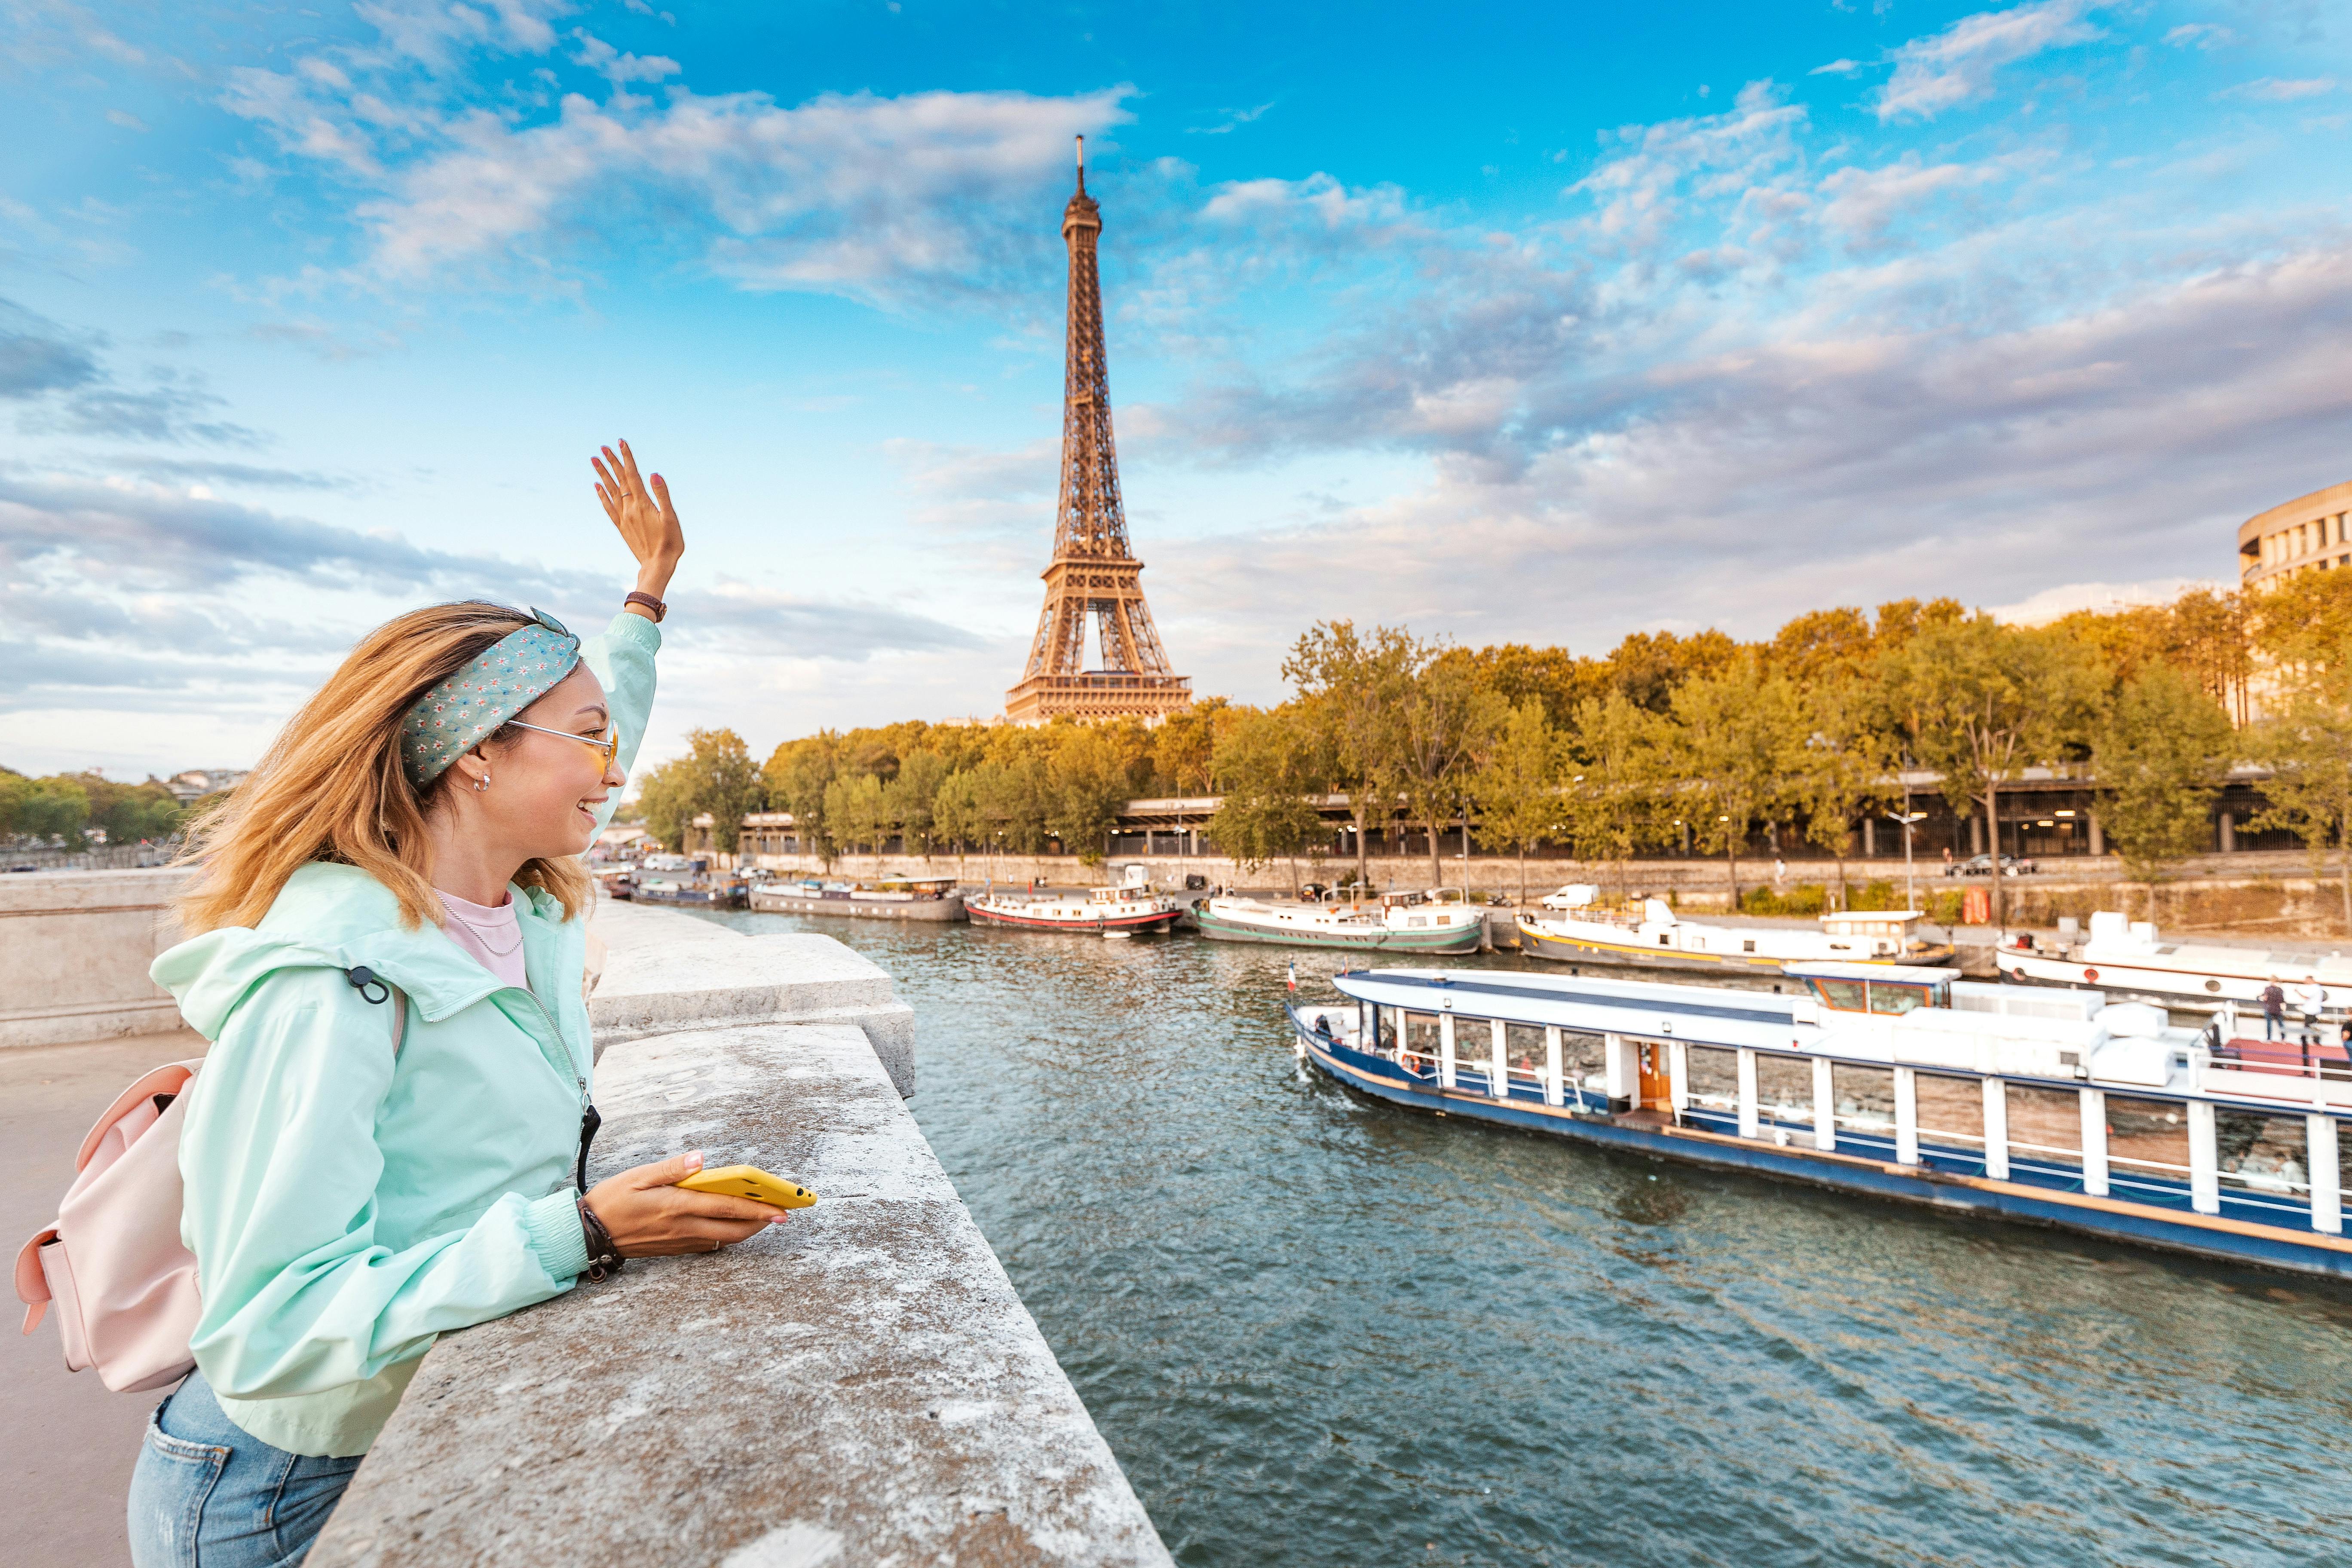 Dinner cruise and Eiffel Tower 2nd floor tickets boeken?